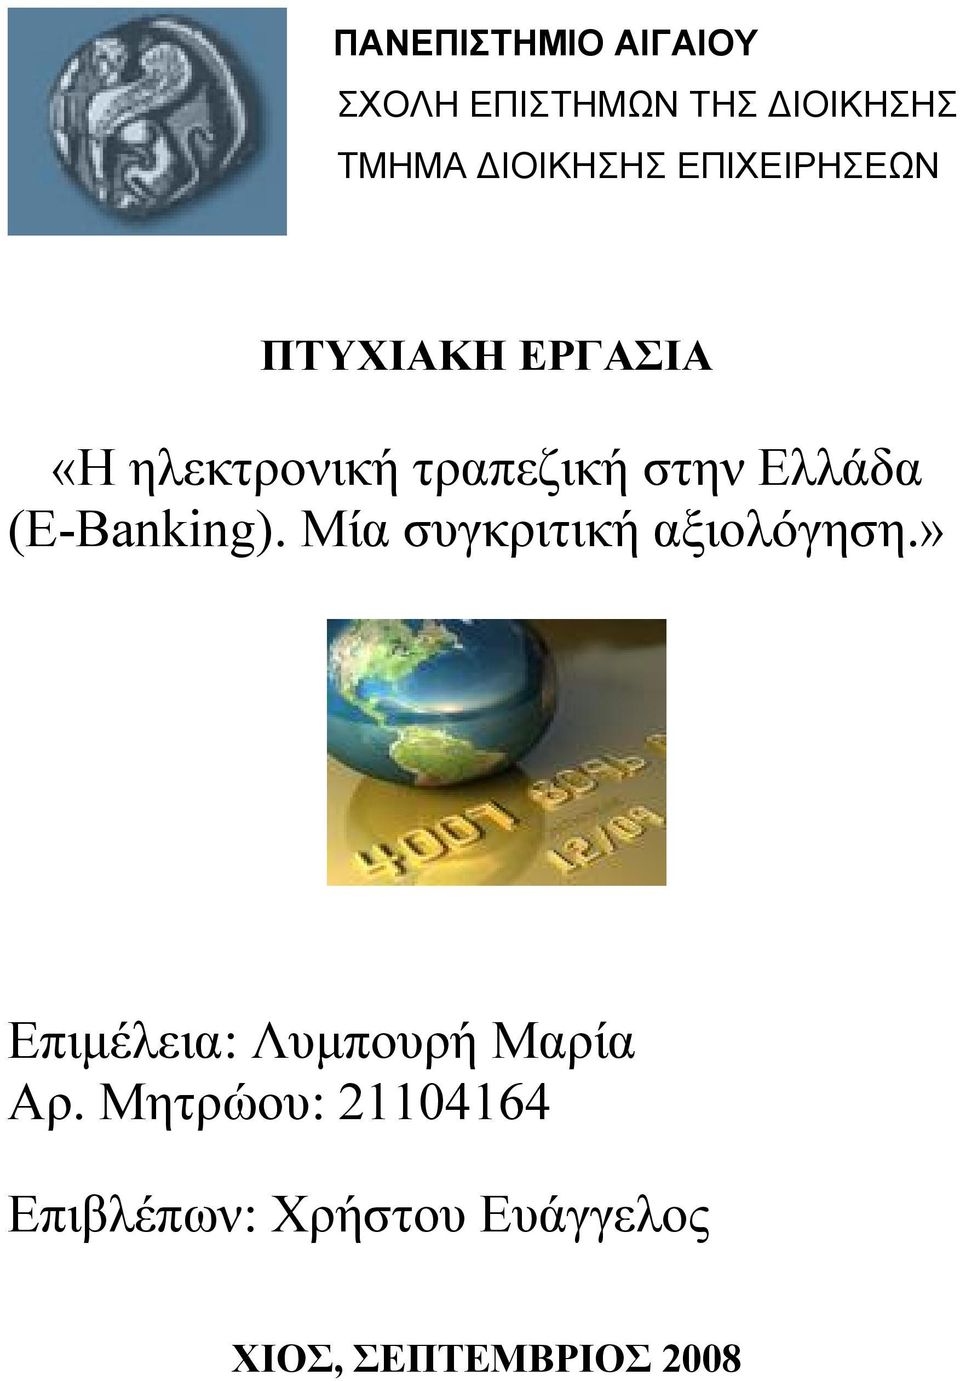 (E-Banking). Μία συγκριτική αξιολόγηση.